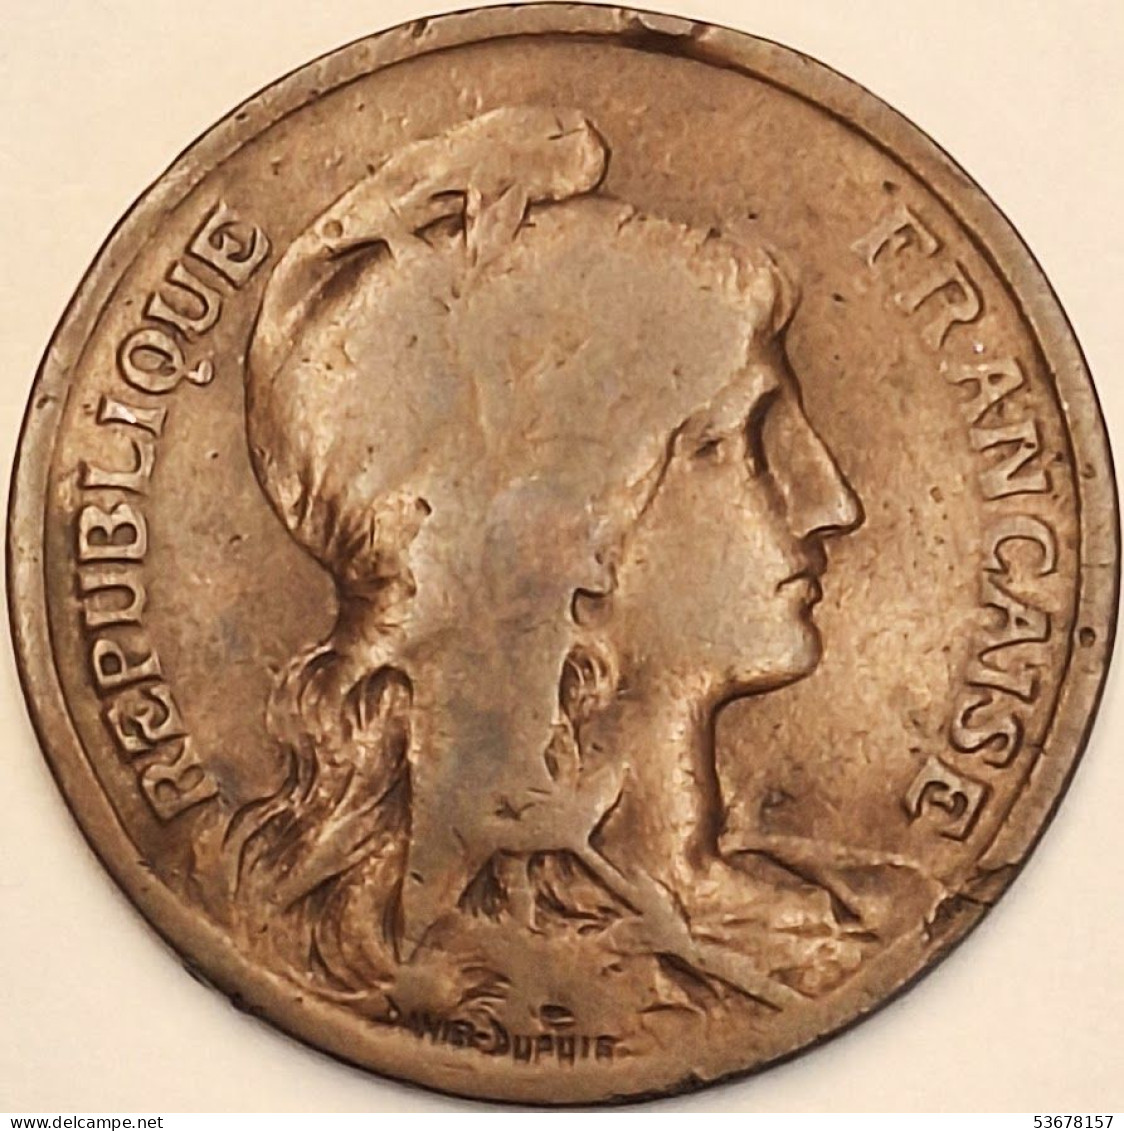 France - 10 Centimes 1916, KM# 843 (#3985) - 10 Centimes